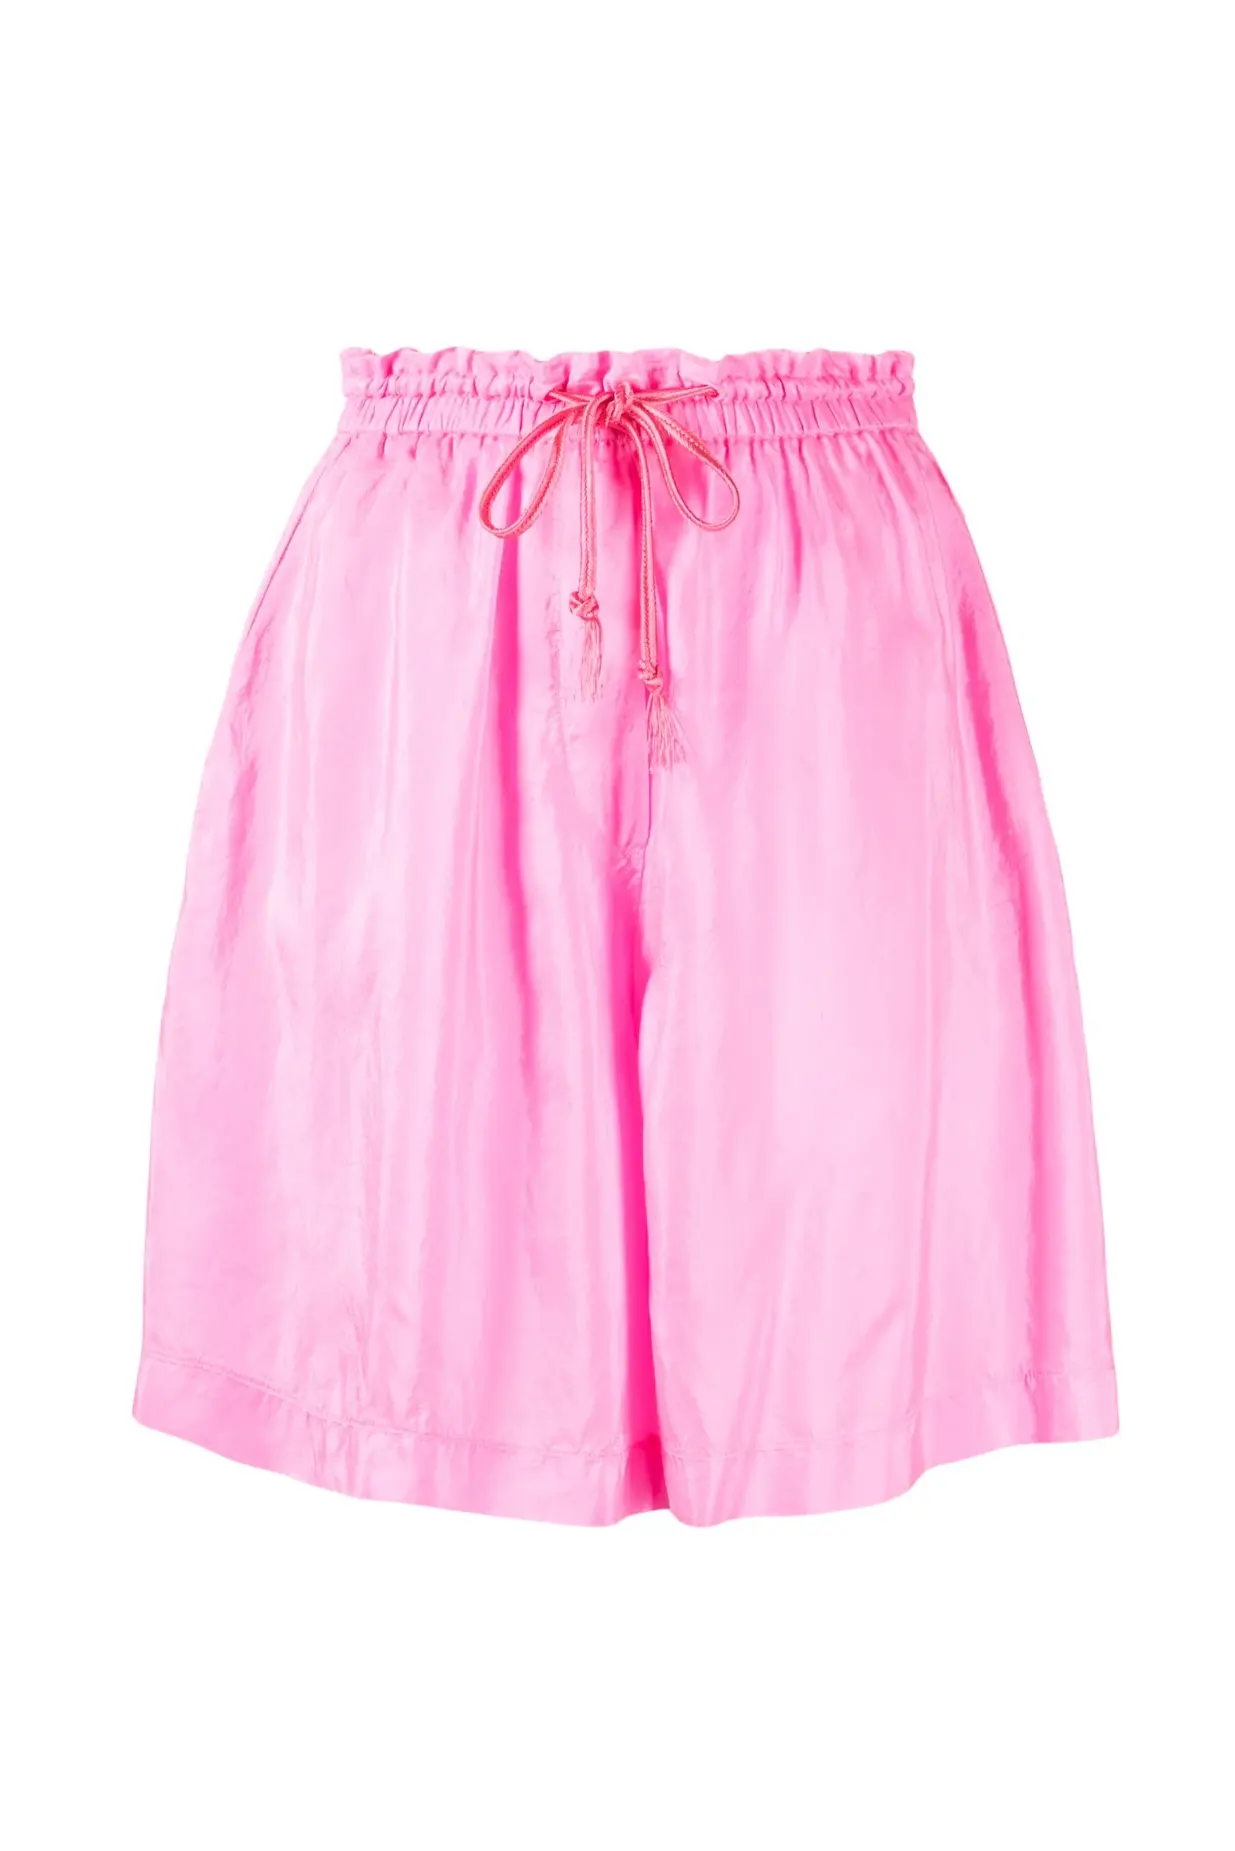 Silk bermuda shorts, pink